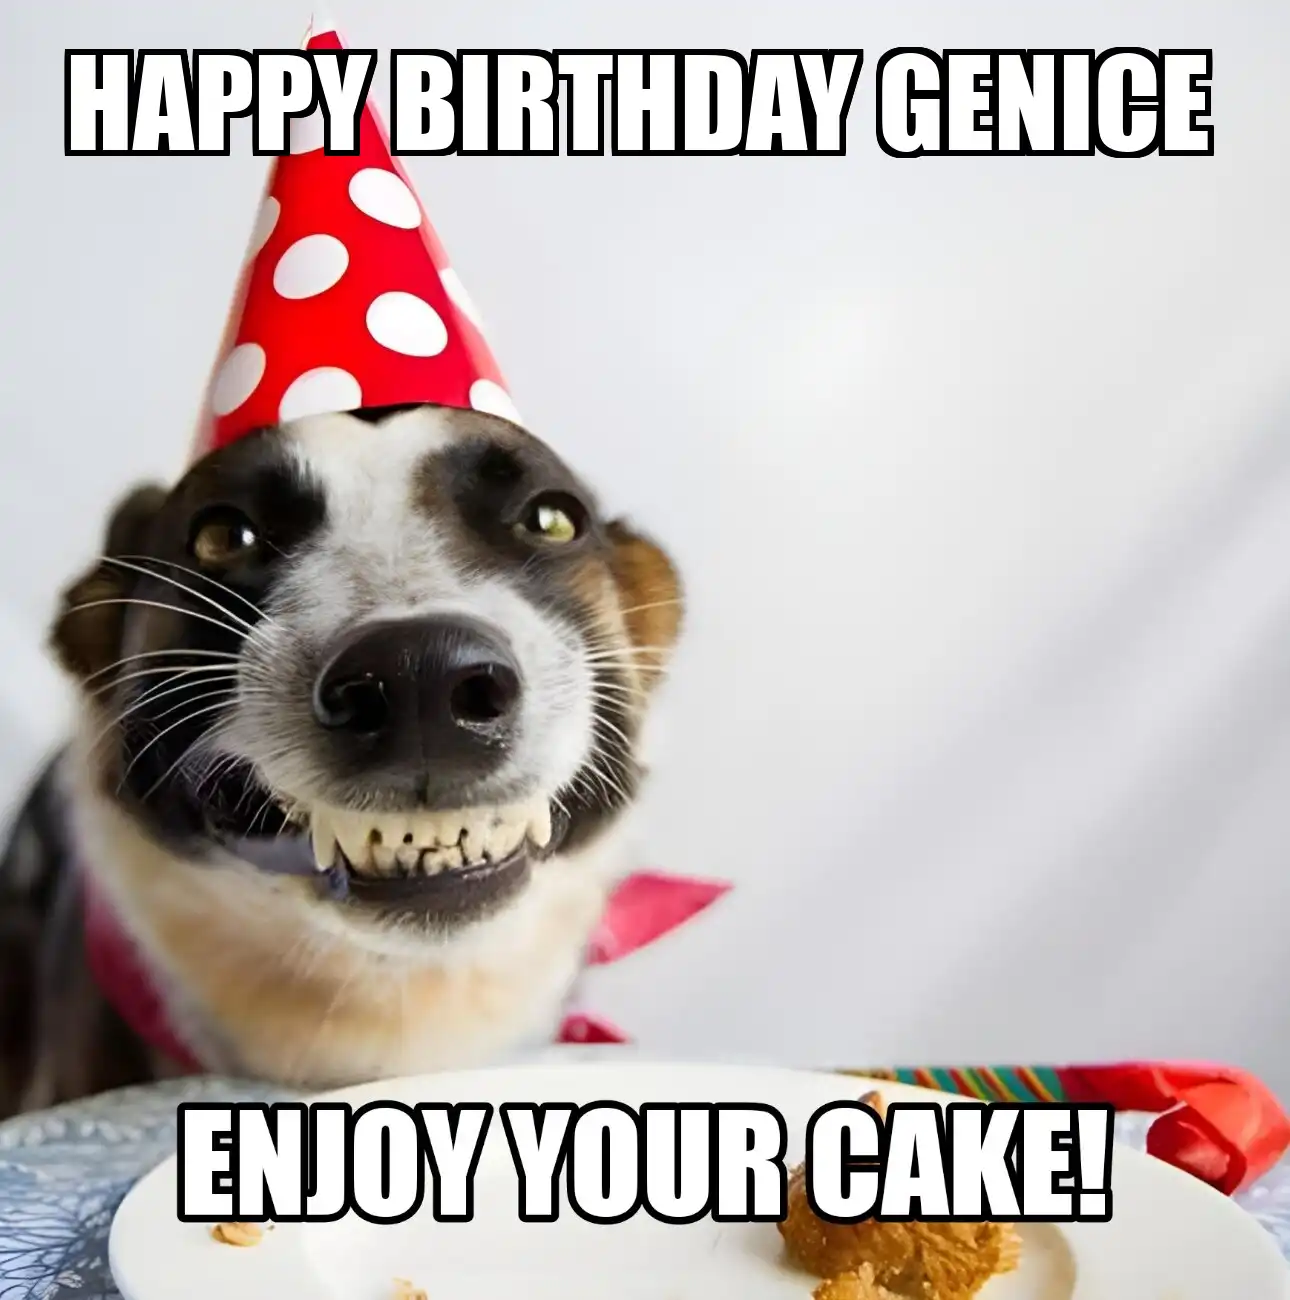 Happy Birthday Genice Enjoy Your Cake Dog Meme